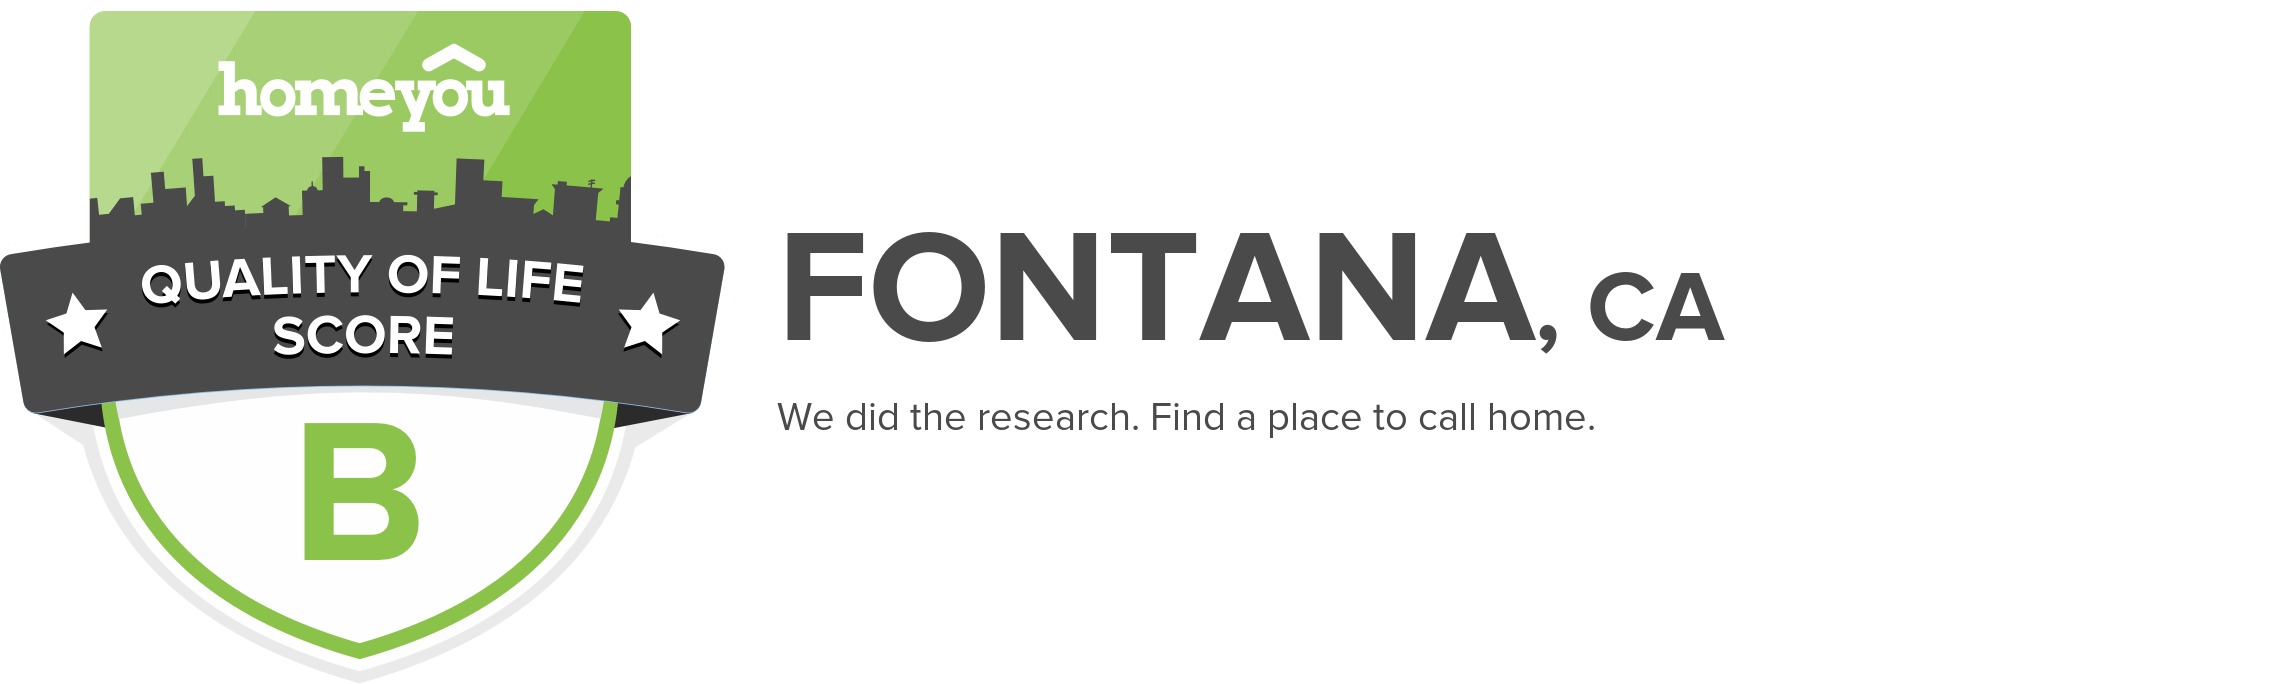 Fontana, CA